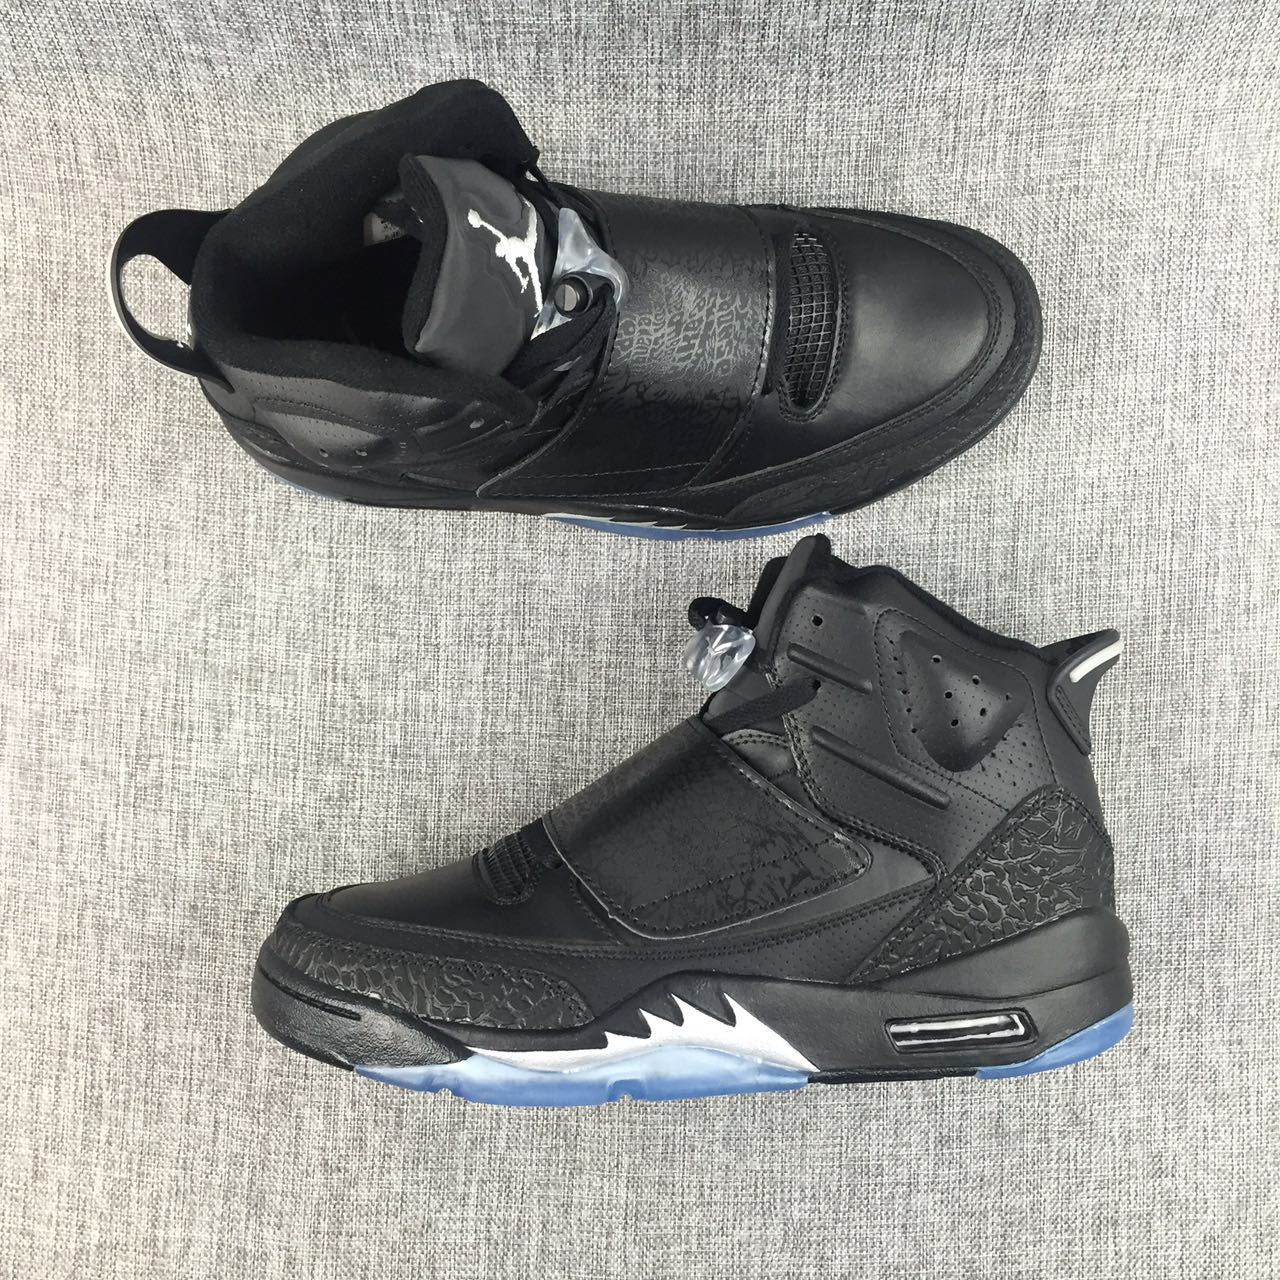 New Air Jordan 5.5 Black Shoes